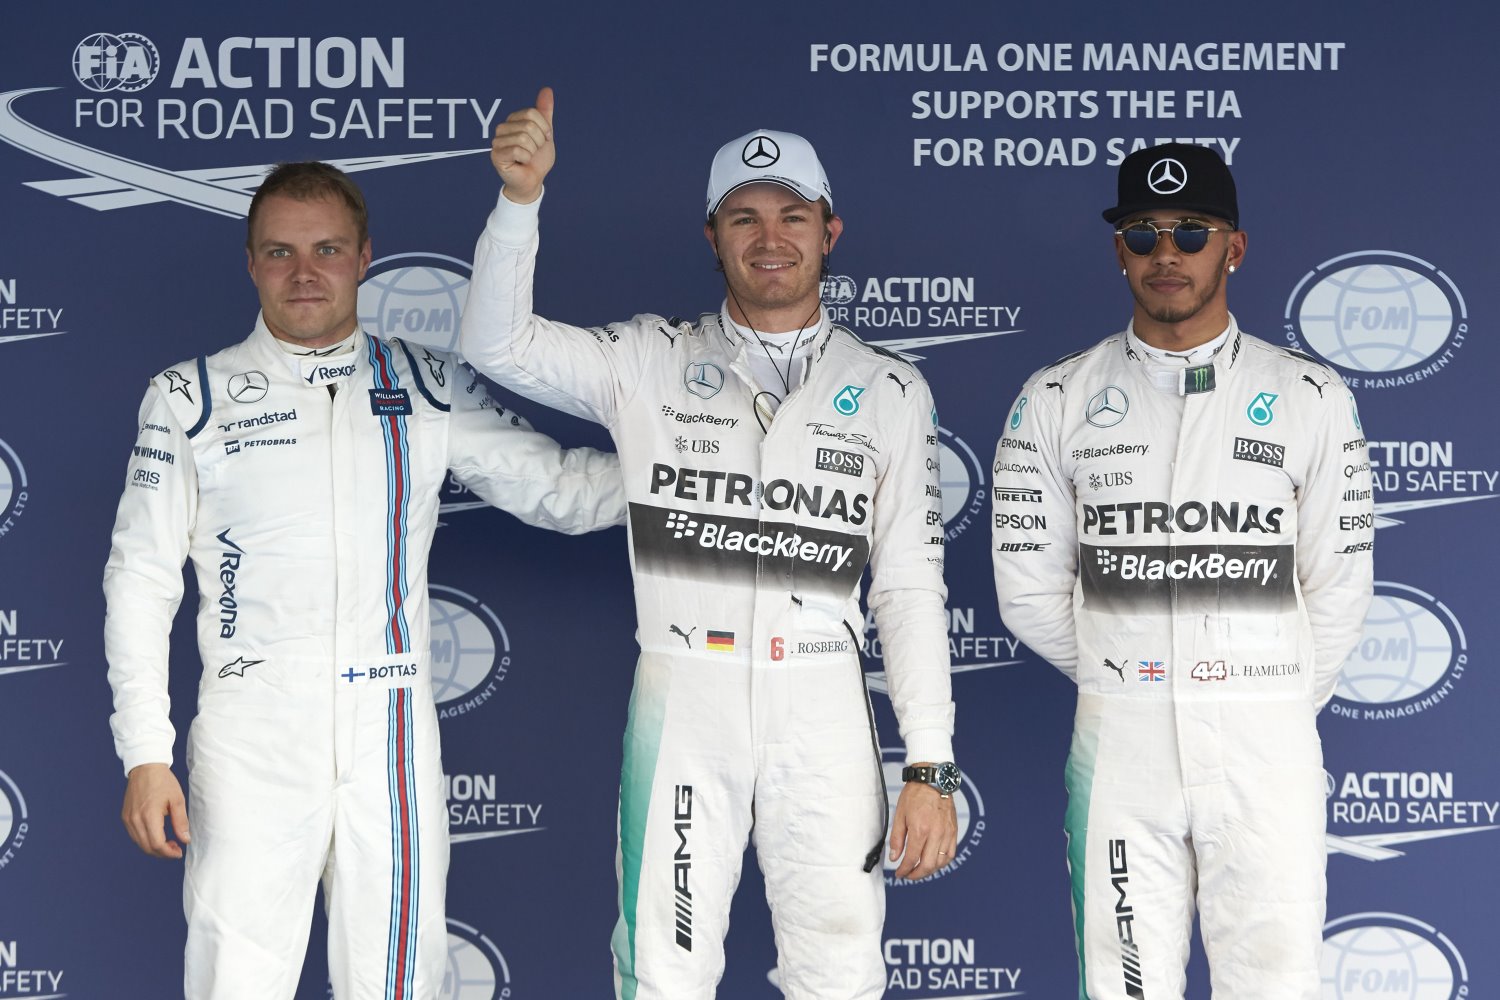 From left, Bottas, Rosberg and Hamilton